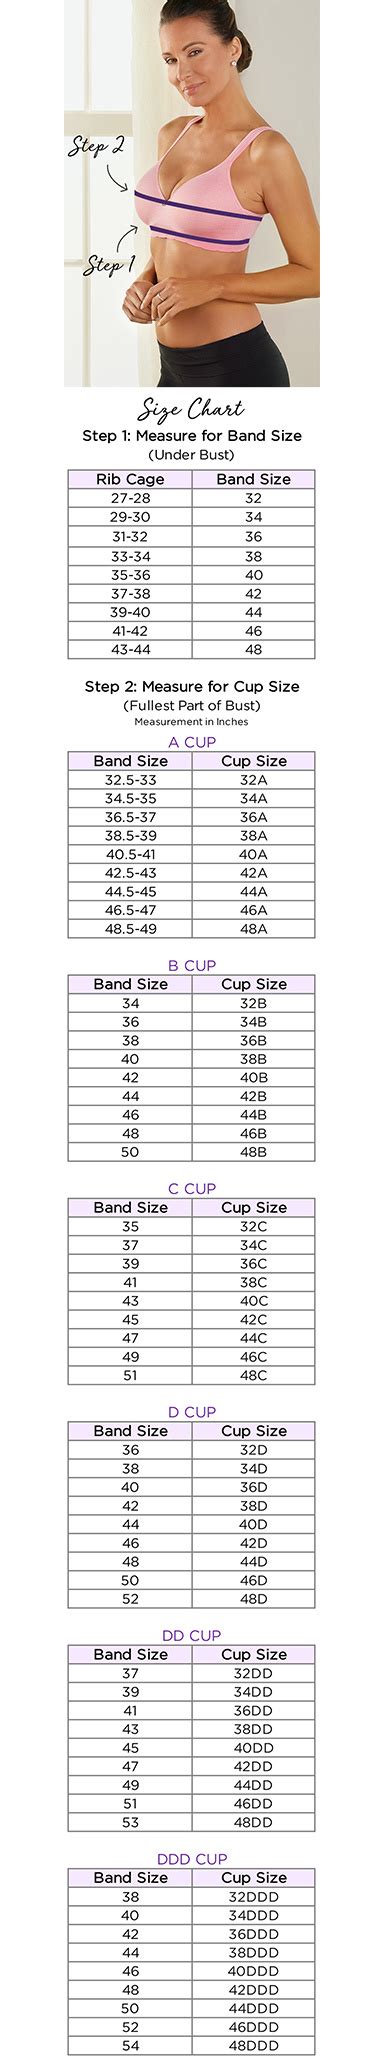 Bra Size Measurement Chart